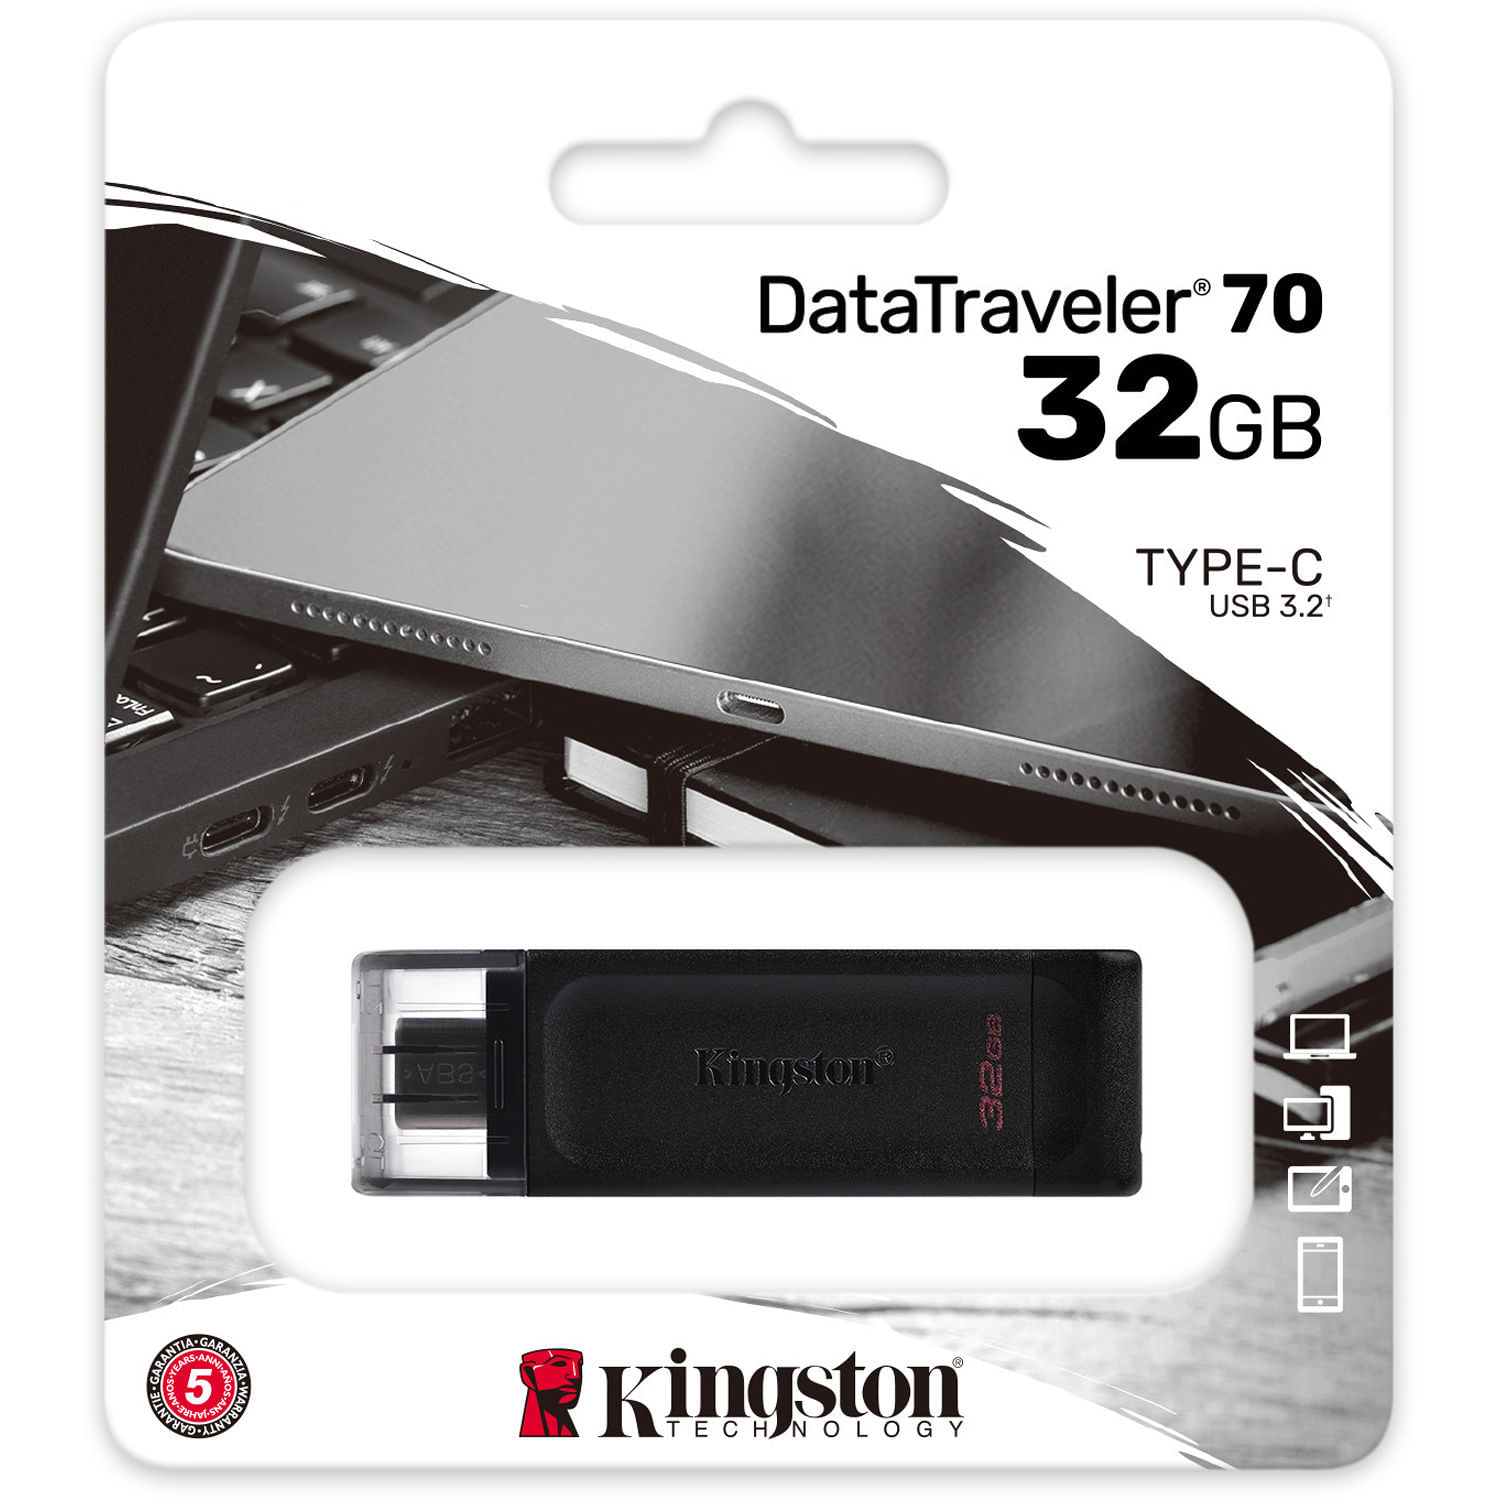 USB-C 3.2 Gen 1 Kingston 32GB DataTraveler 70 - DT70/32GB